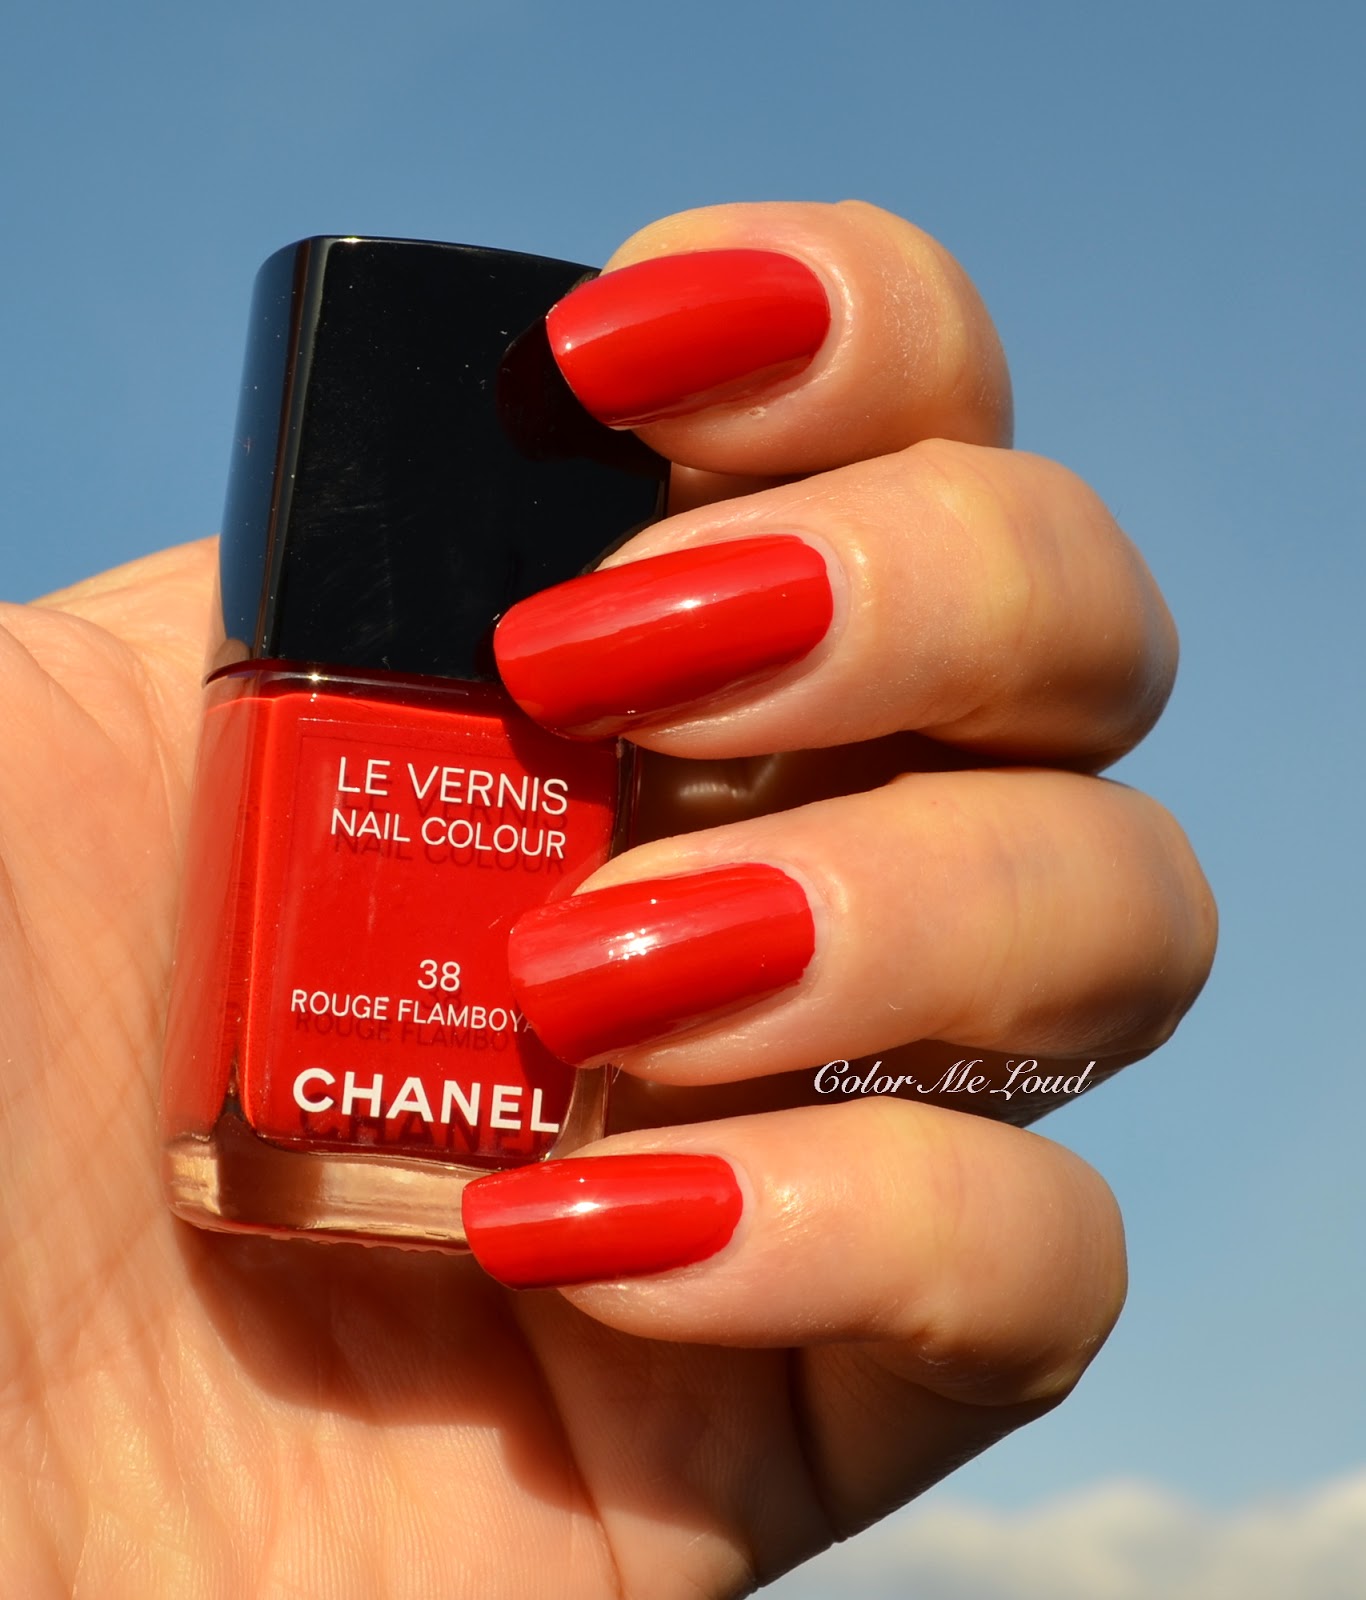 Chanel Le Vernis Nail Colour Polish, 601 Mysterious